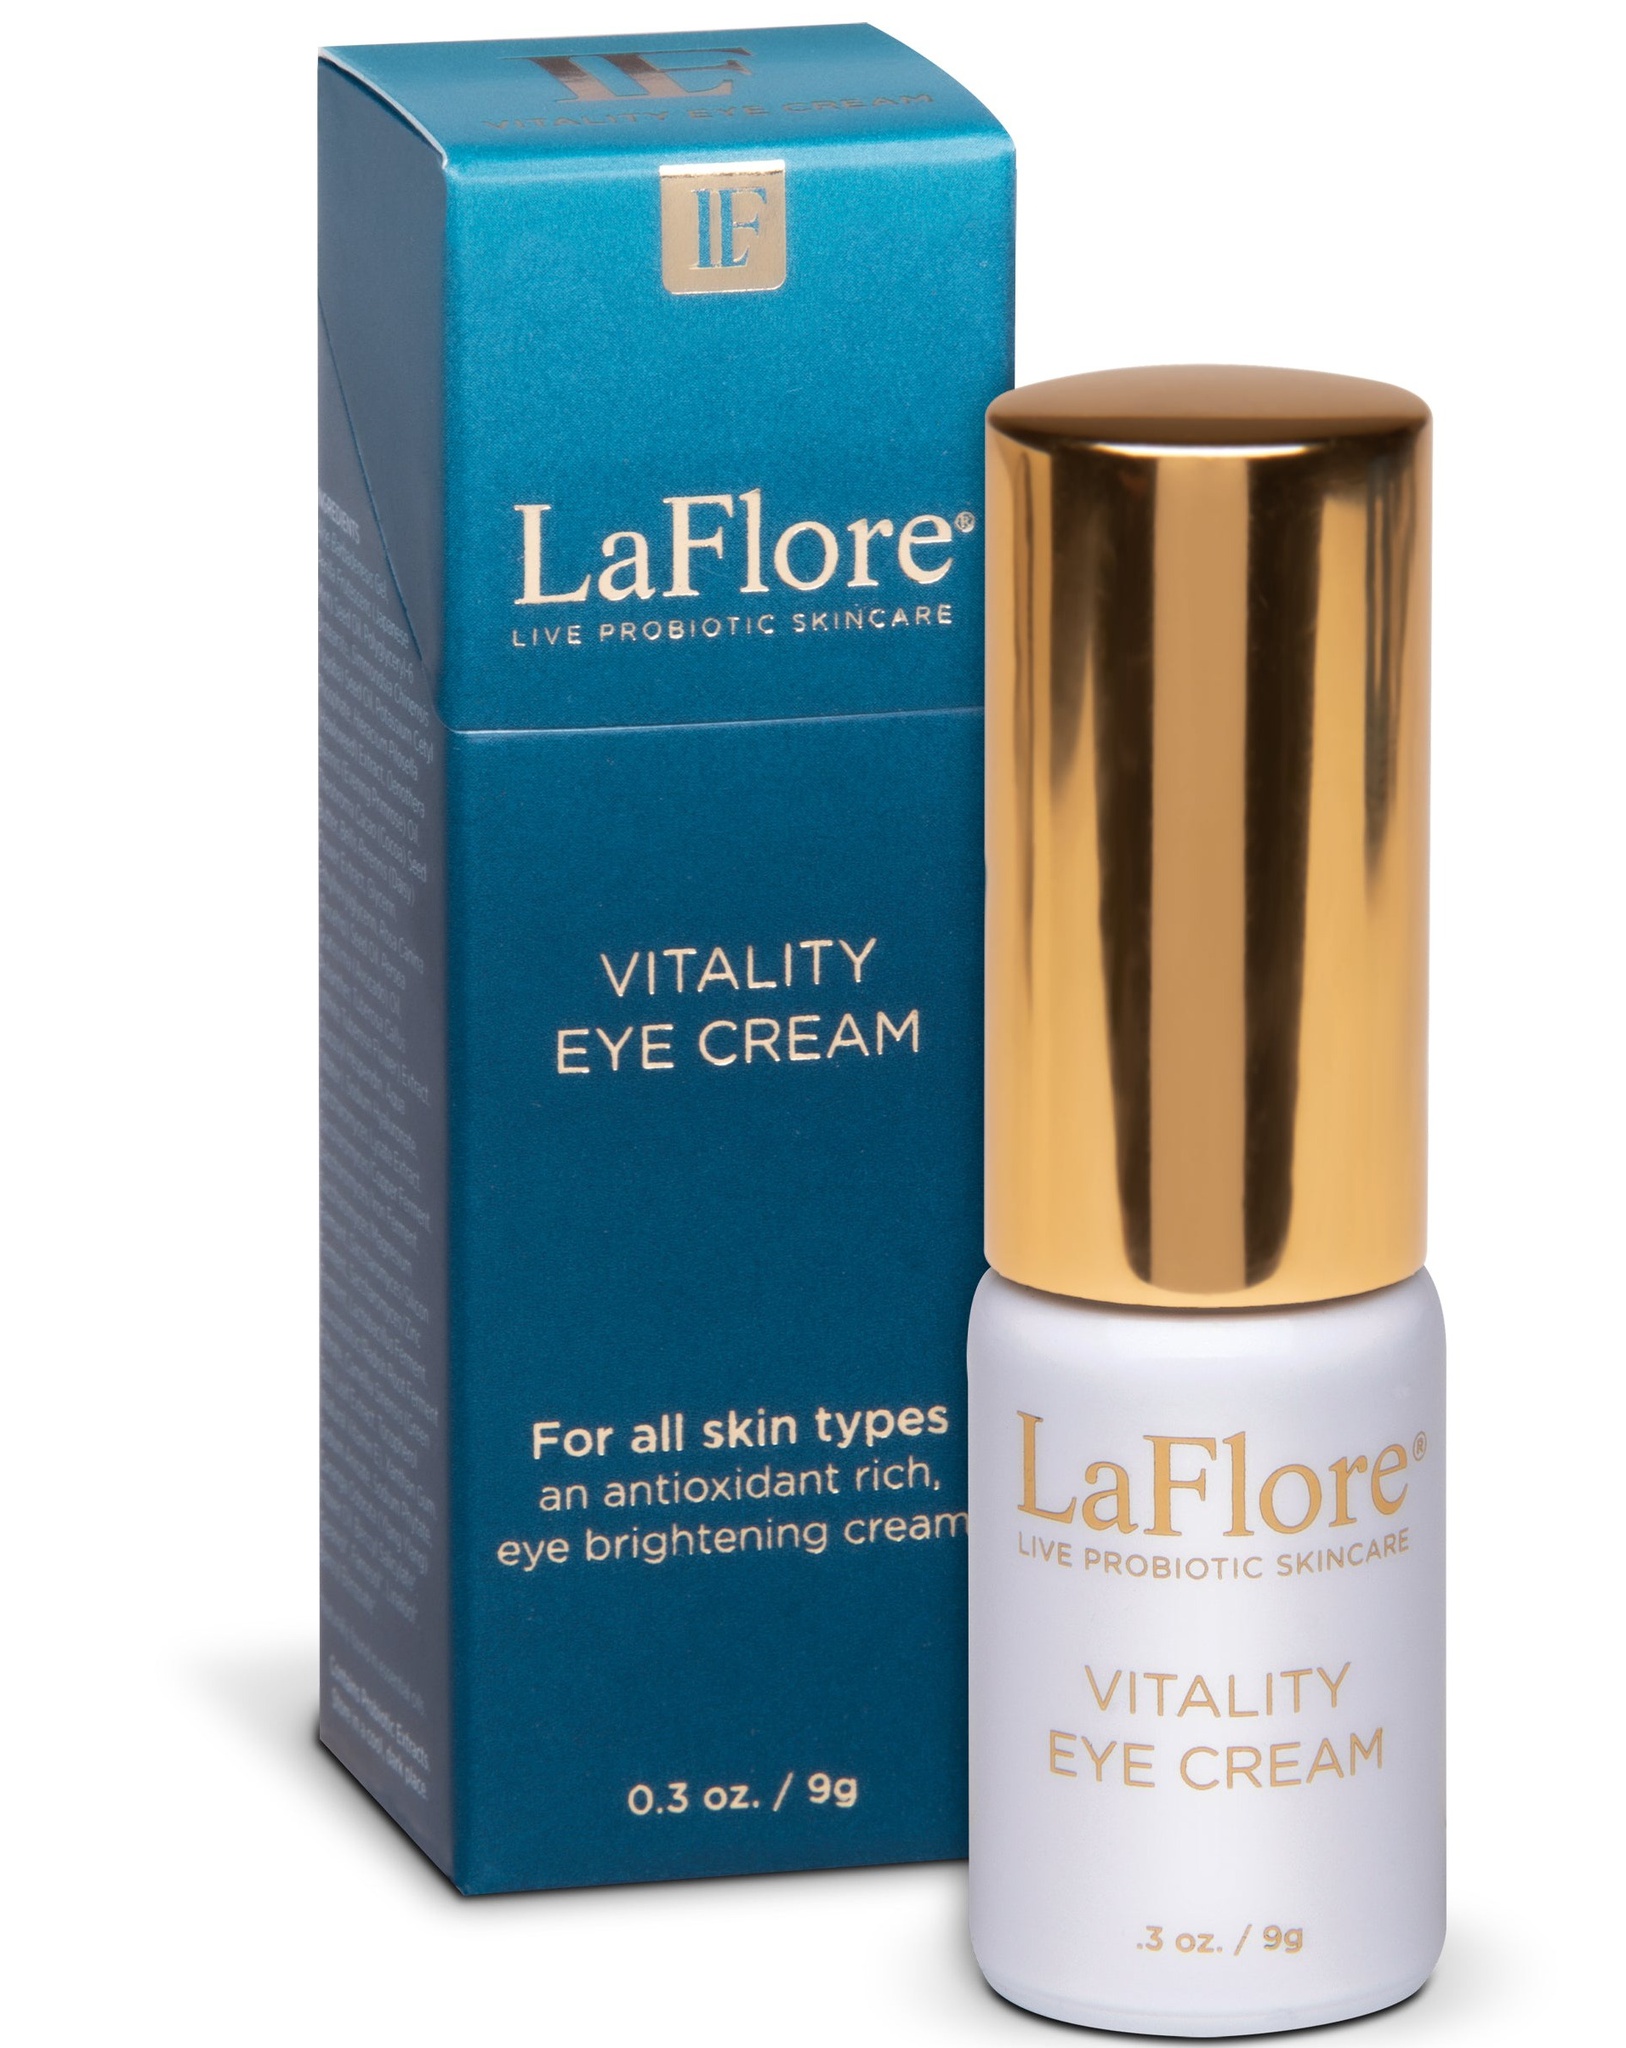 LaFlore Live Probiotic Skincare Vitality Eye Cream